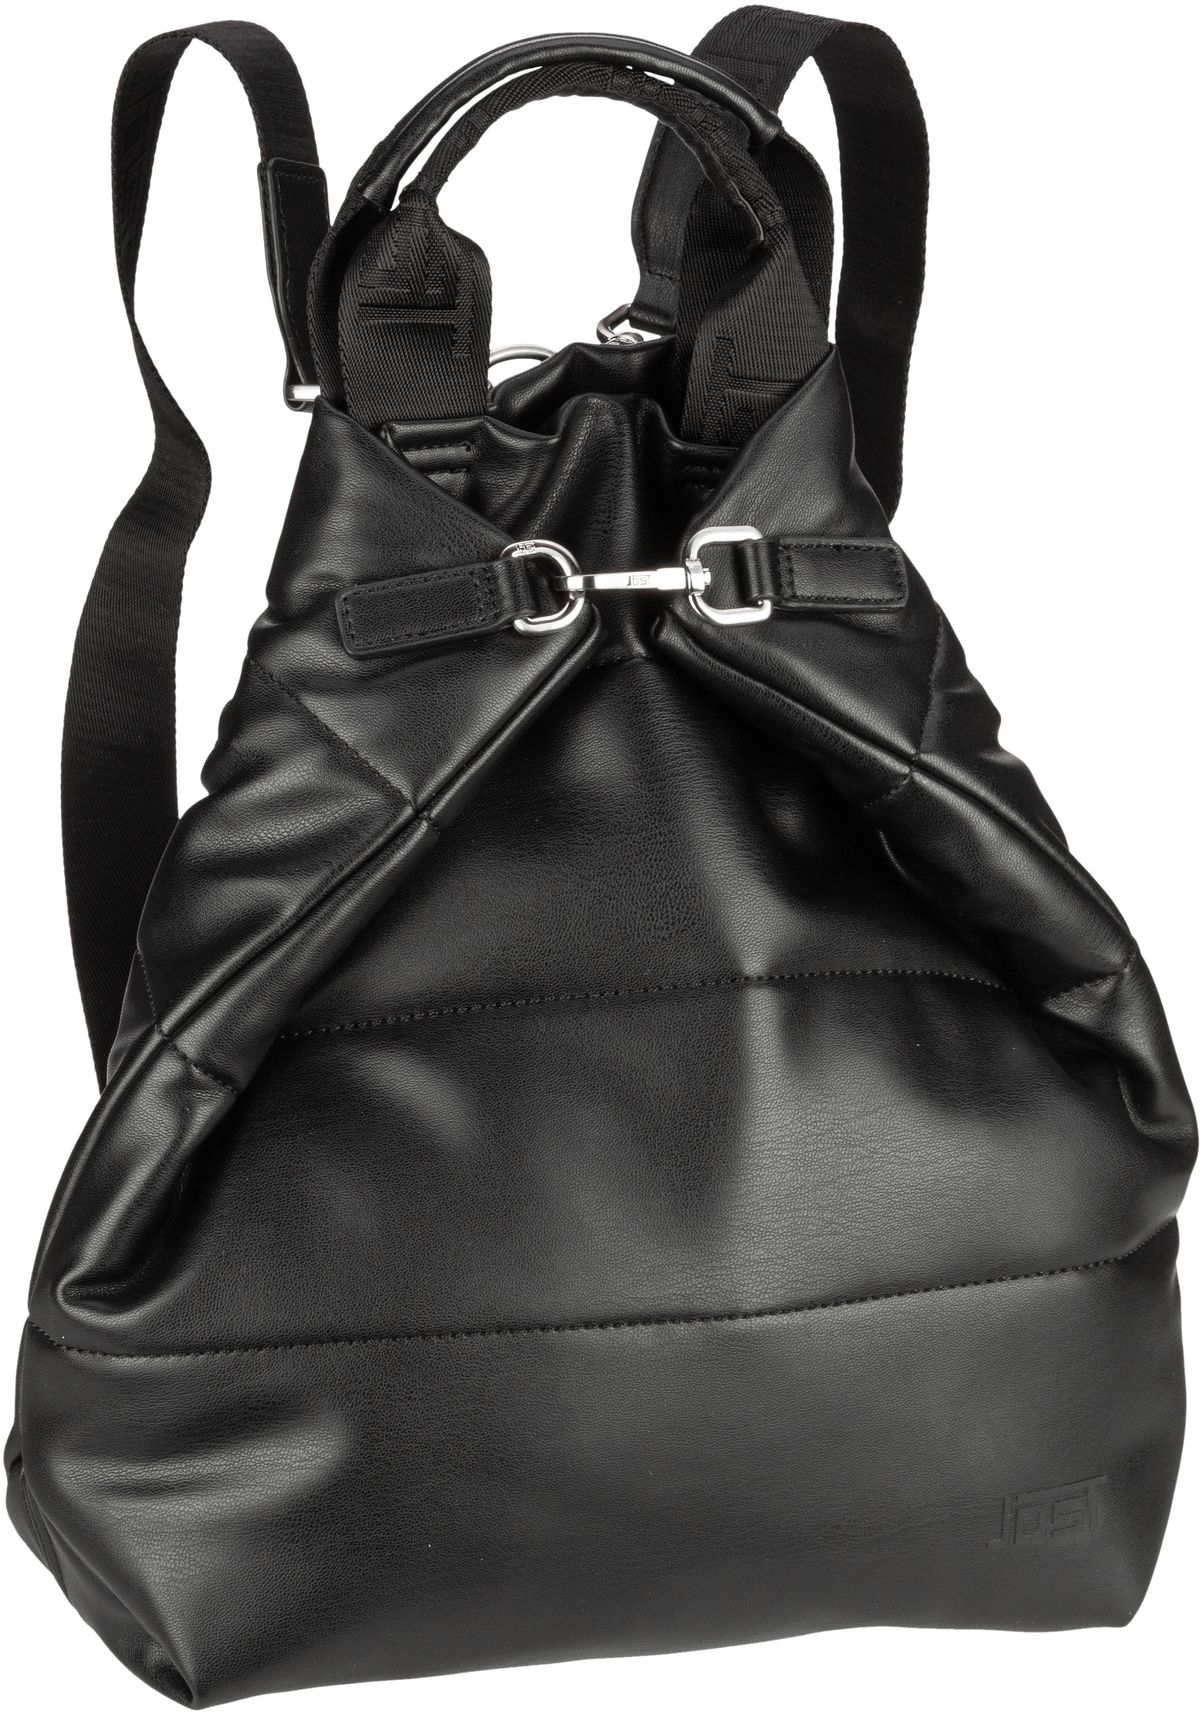 Jost Kaarina X-Change Bag XS - Black